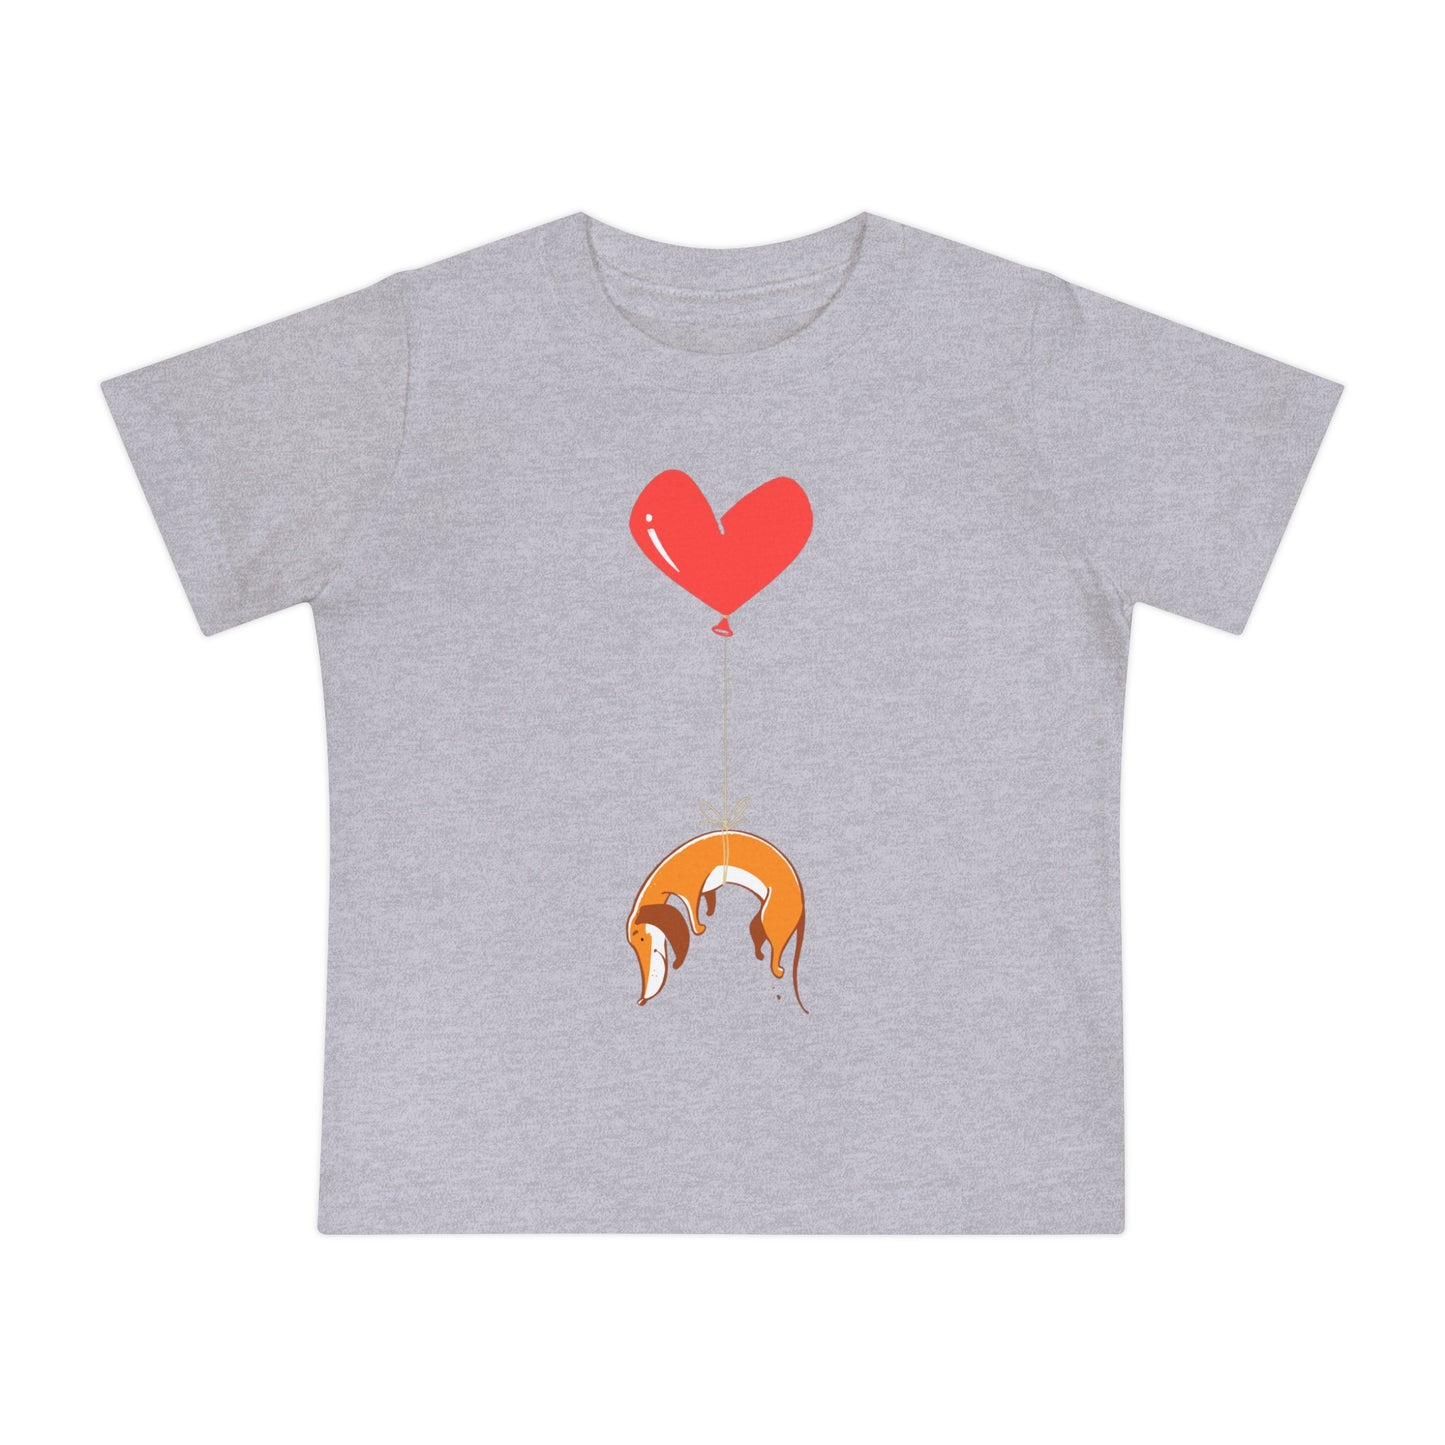 Wiener Dog on Heart Strings Baby Graphic Tee